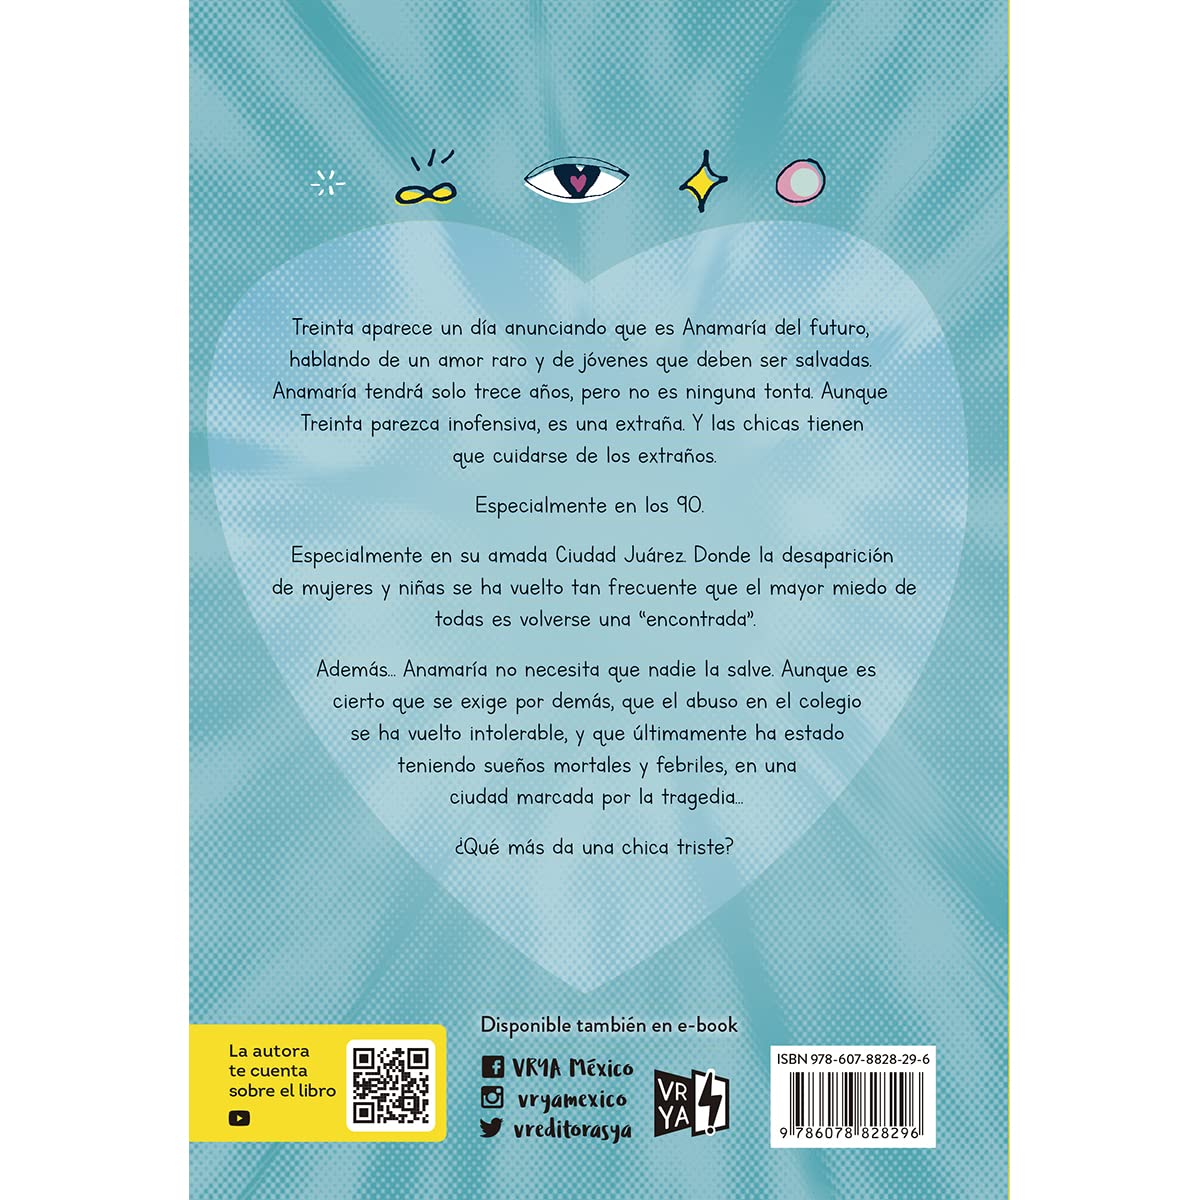 Treinta me habla de amor / Thirty Speaks of Love (Spanish Edition) Paperback